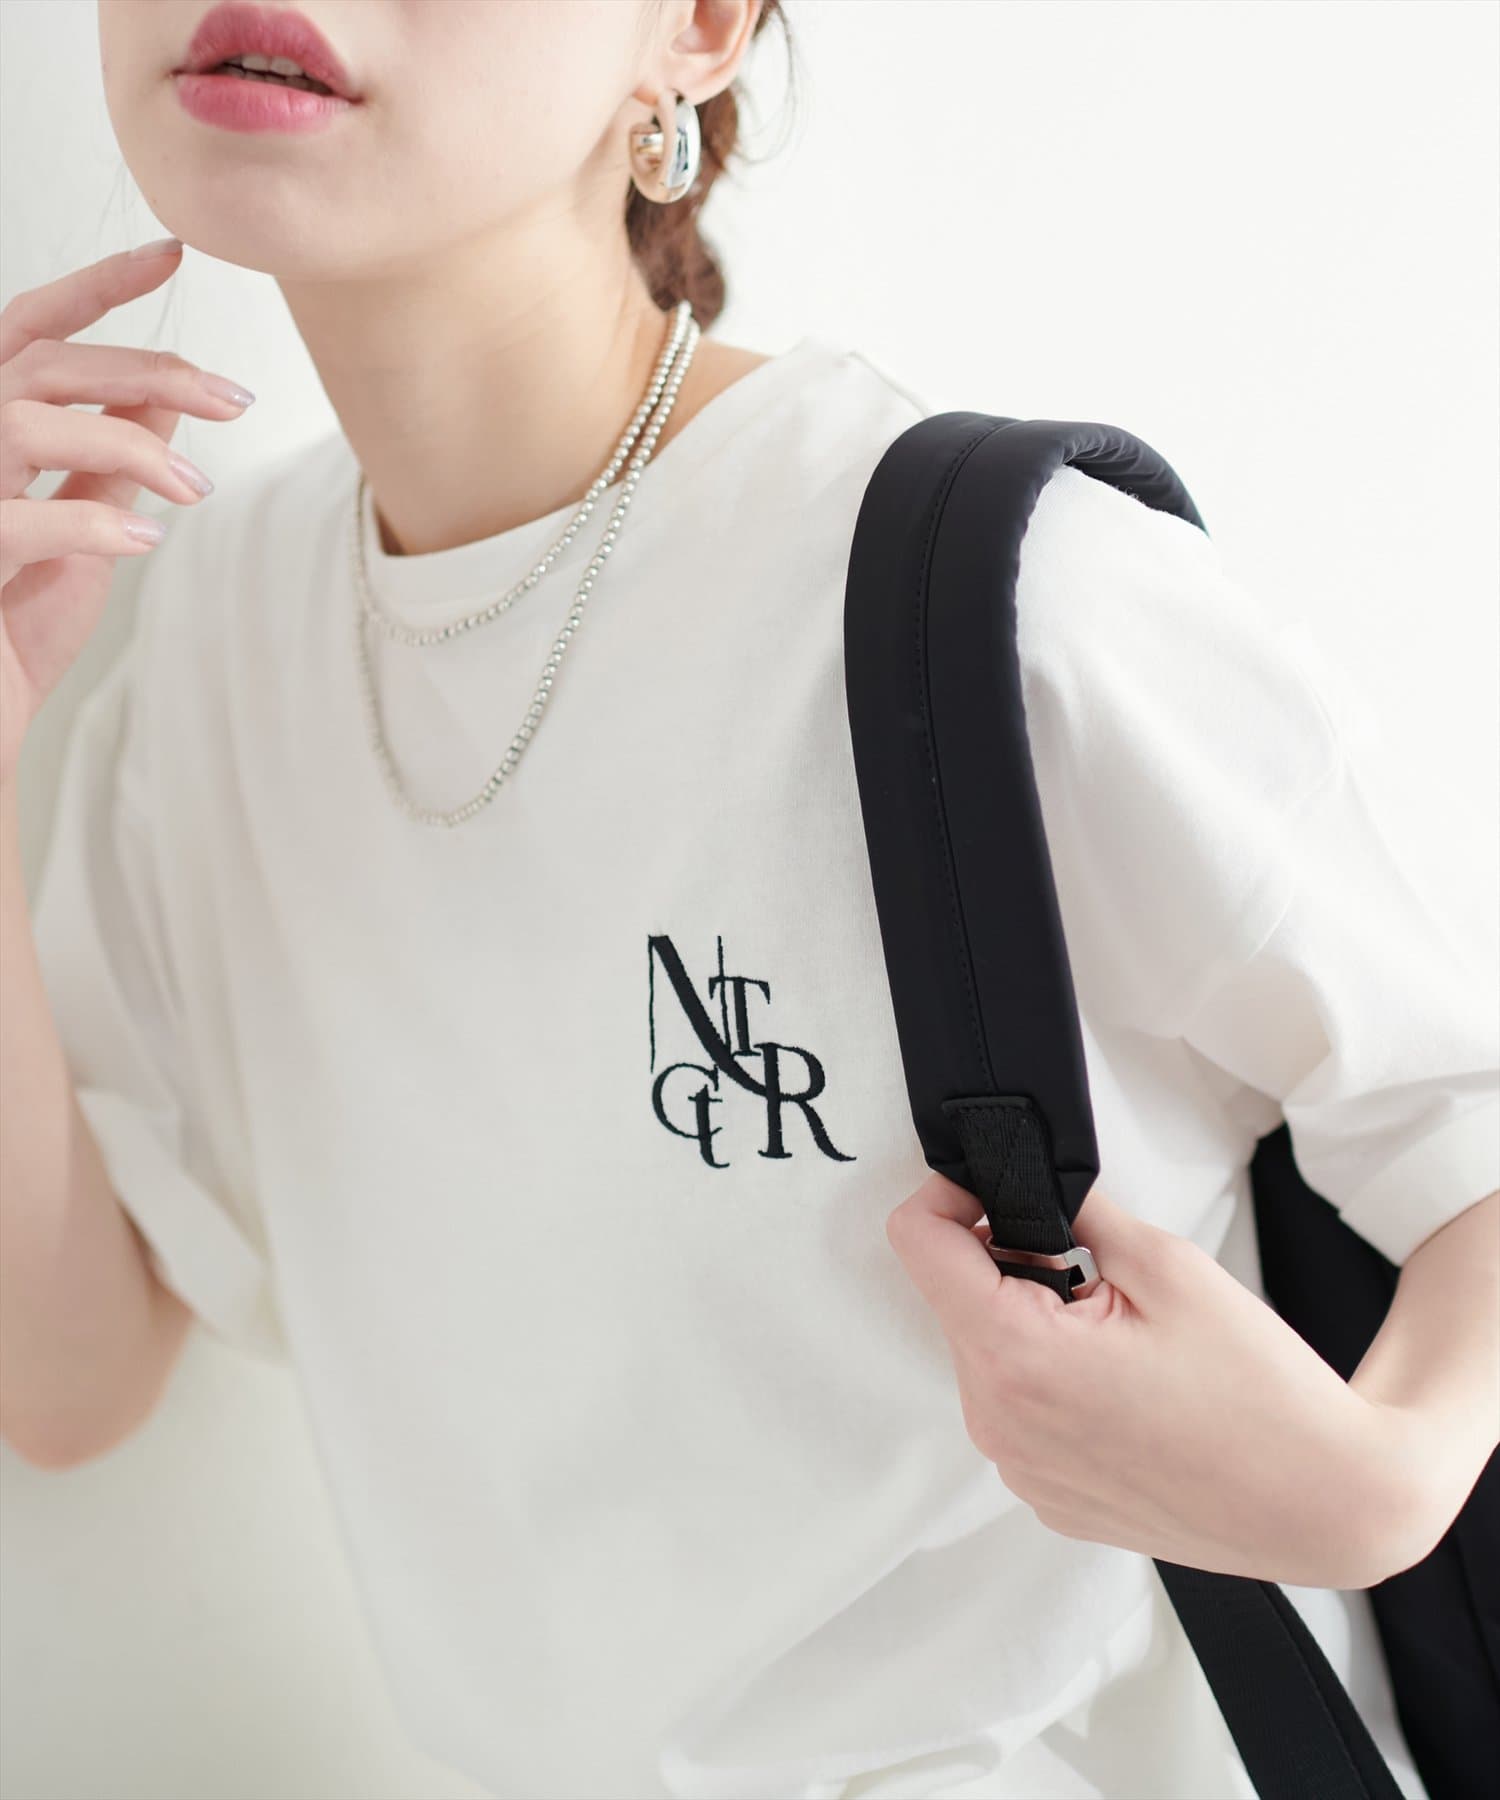 natural couture(ナチュラルクチュール) 袖口ロールUPロゴ刺繍T